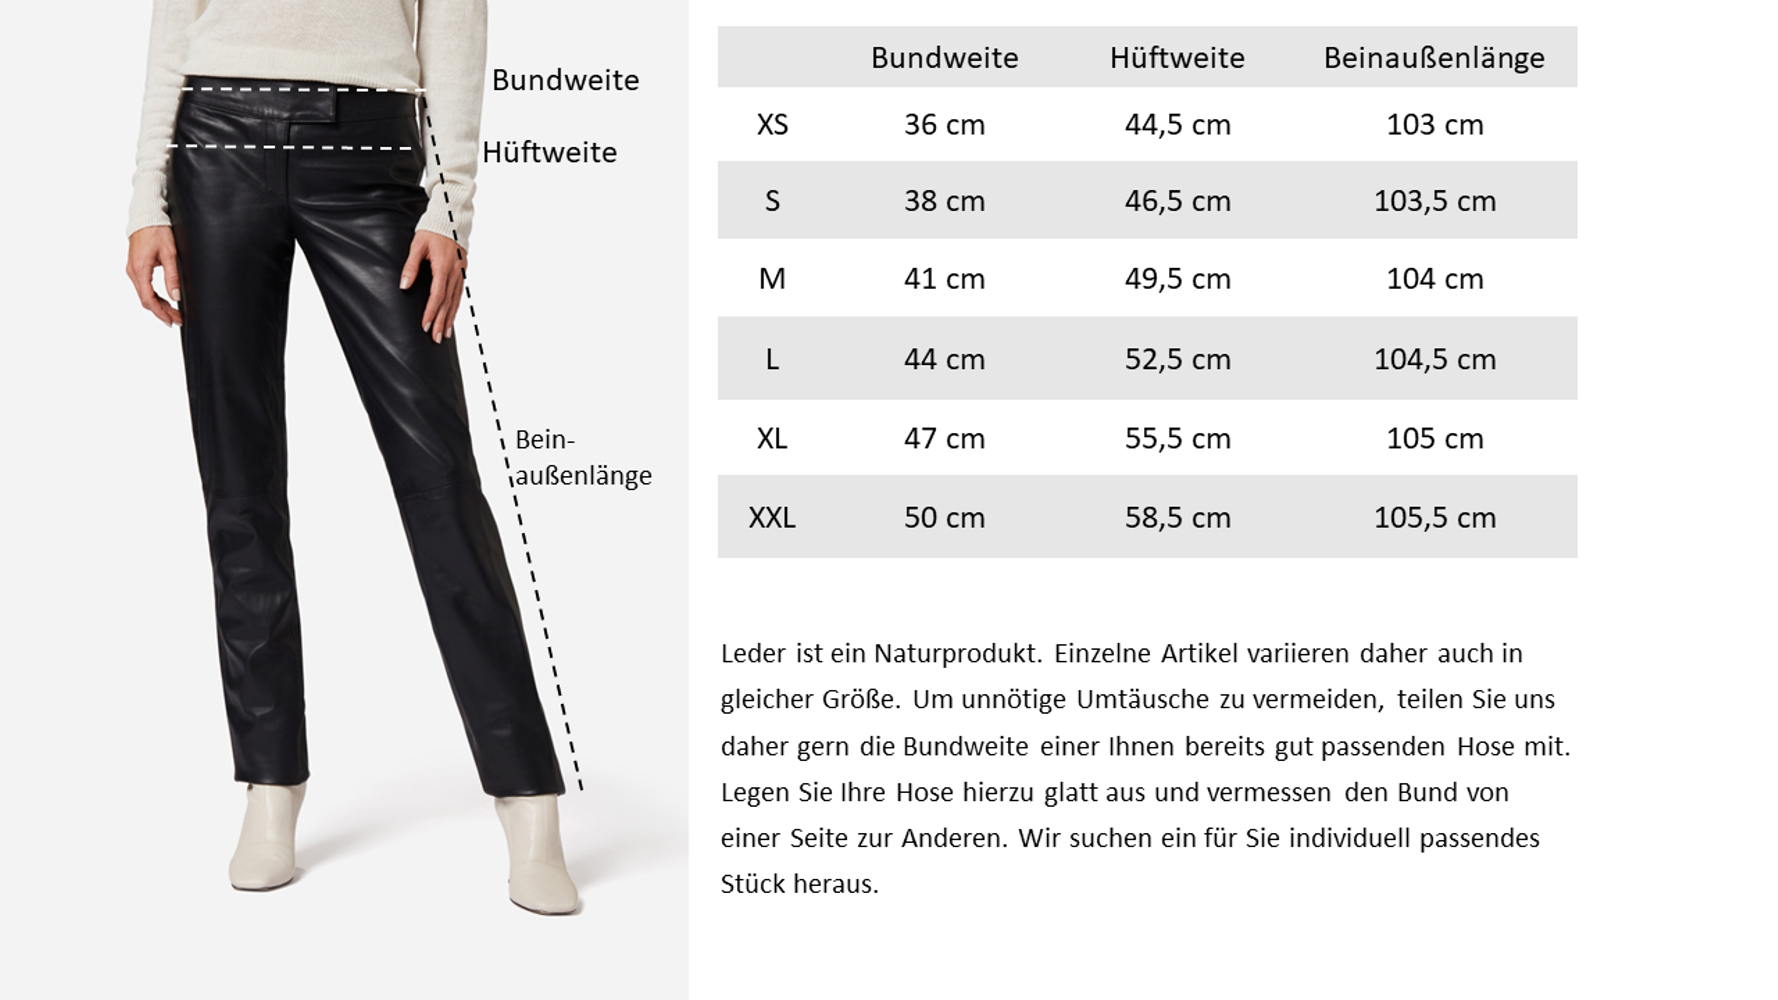 Damen-Lederhose Low Cut, Schwarz in 2 Farben, Bild 7